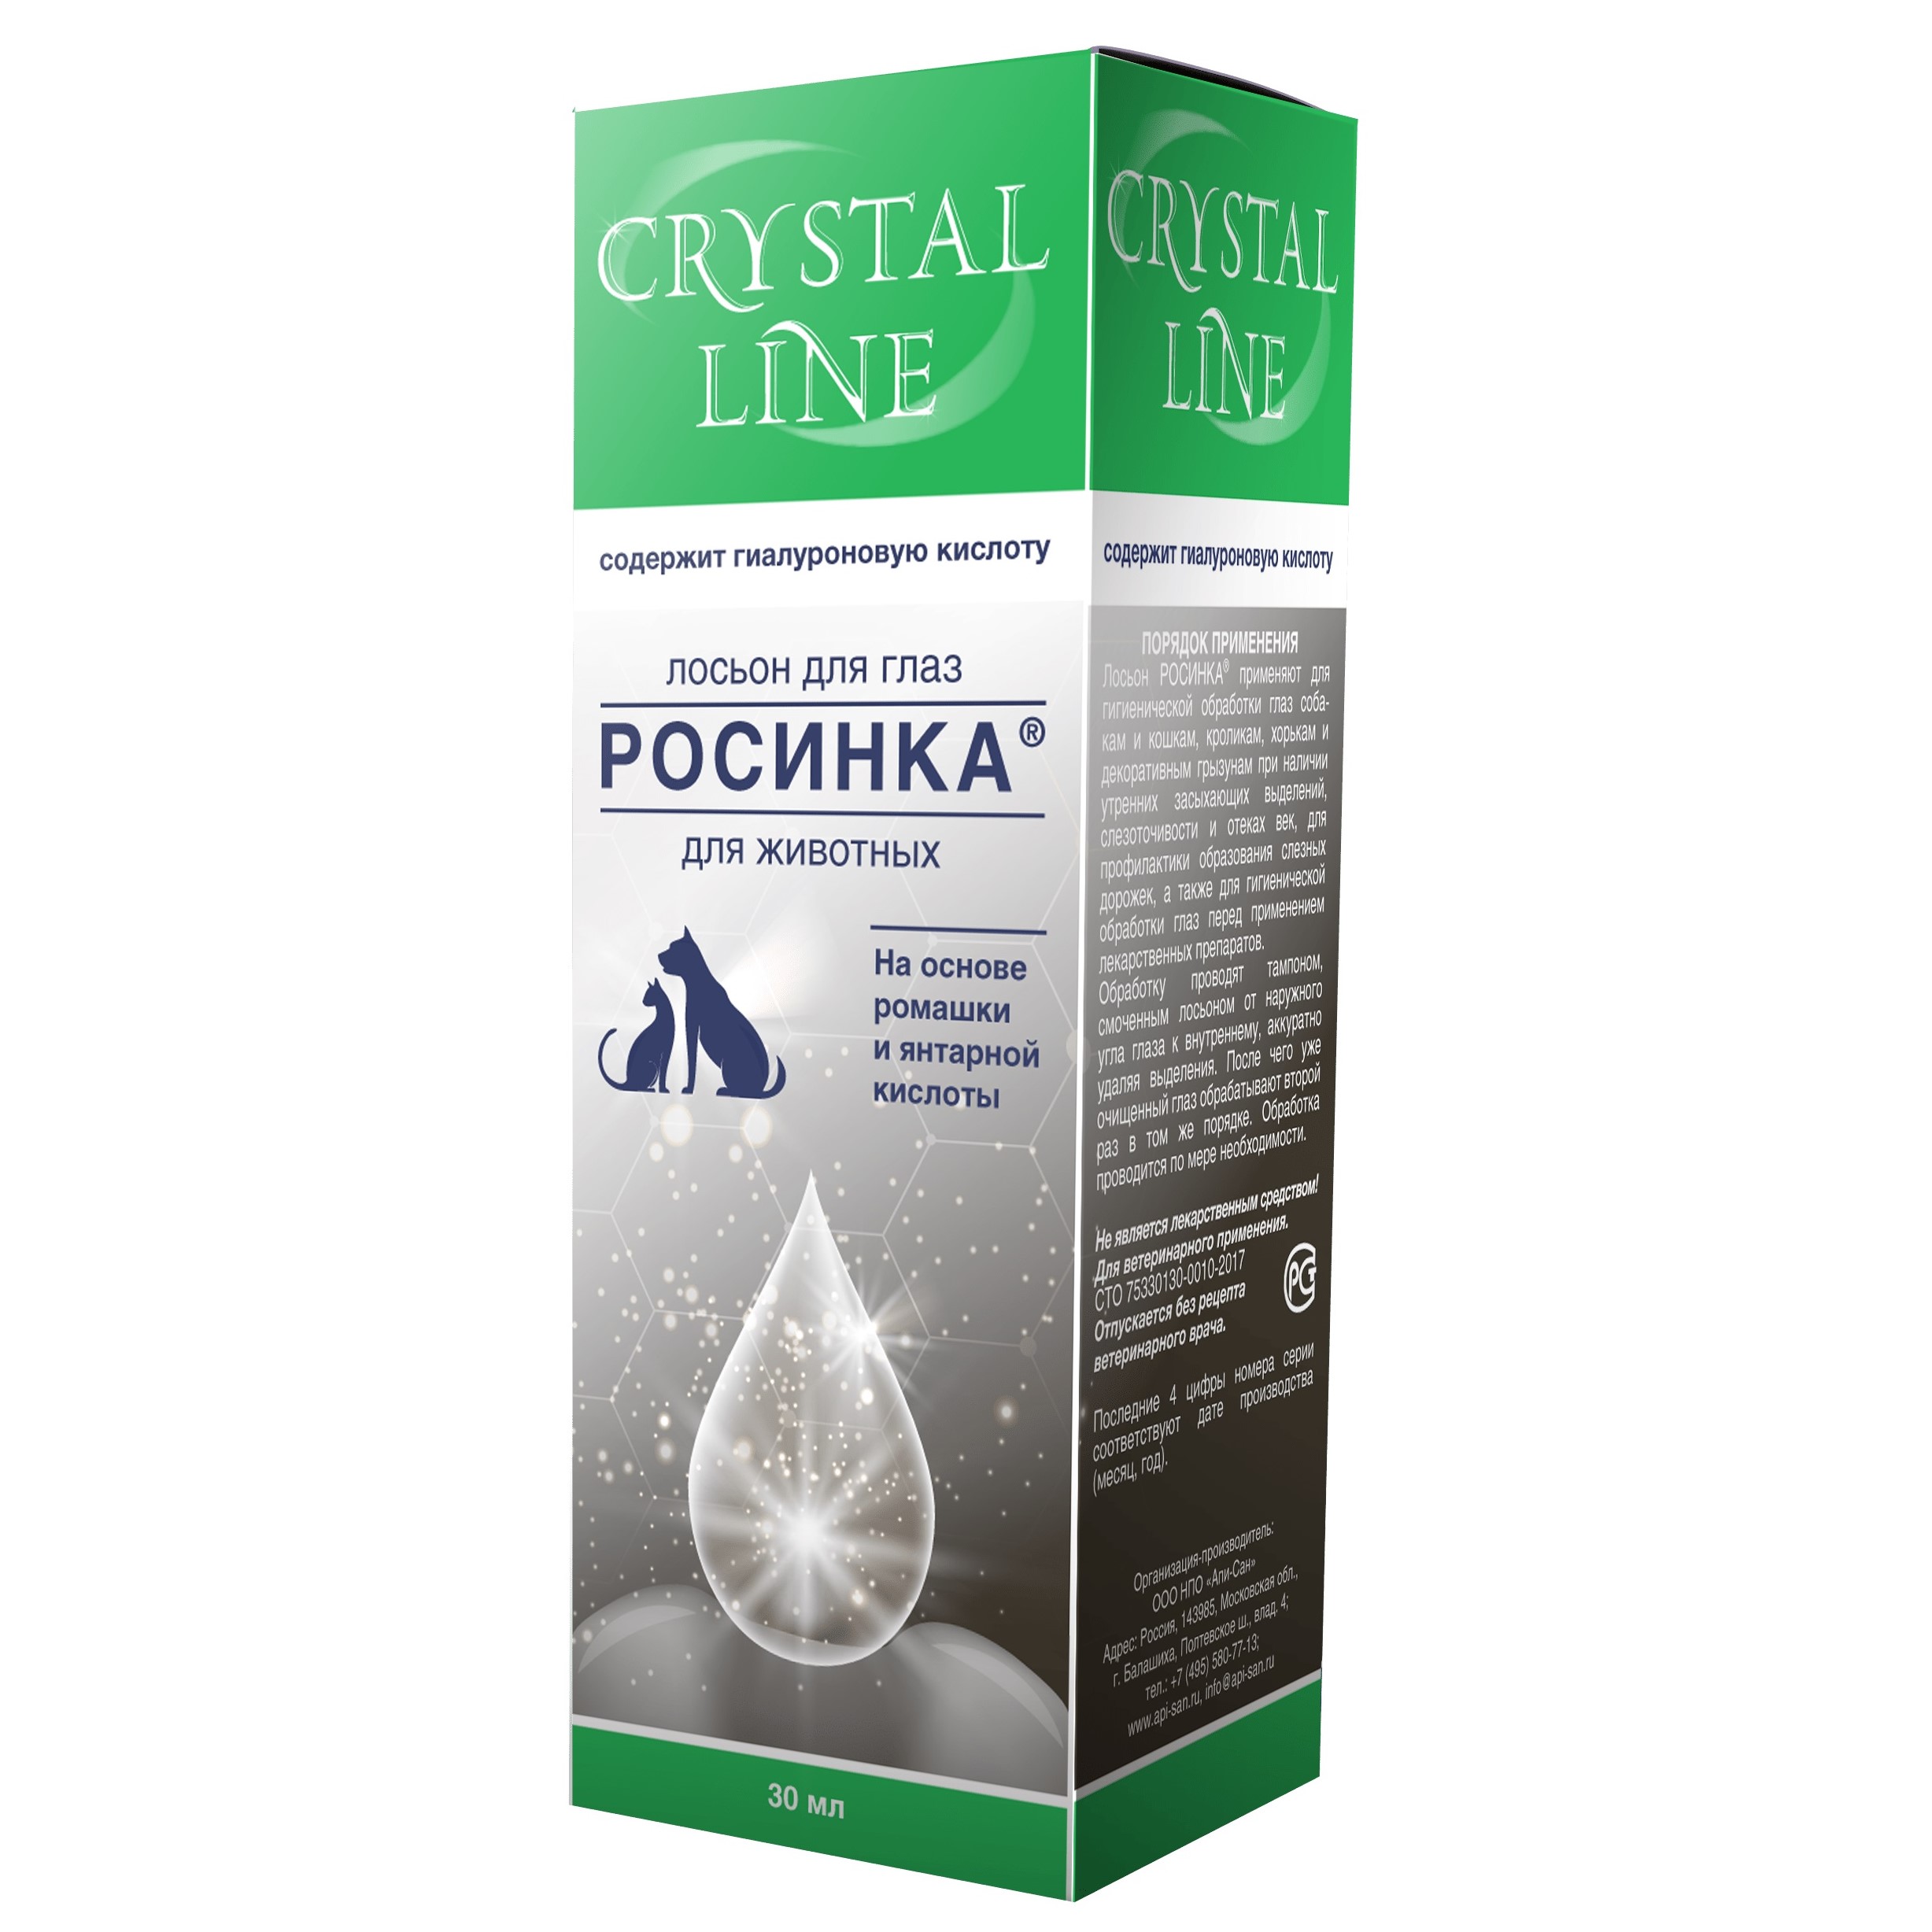 Apicenna CRYSTAL LINE Росинка лосьон для глаз фл. 30мл